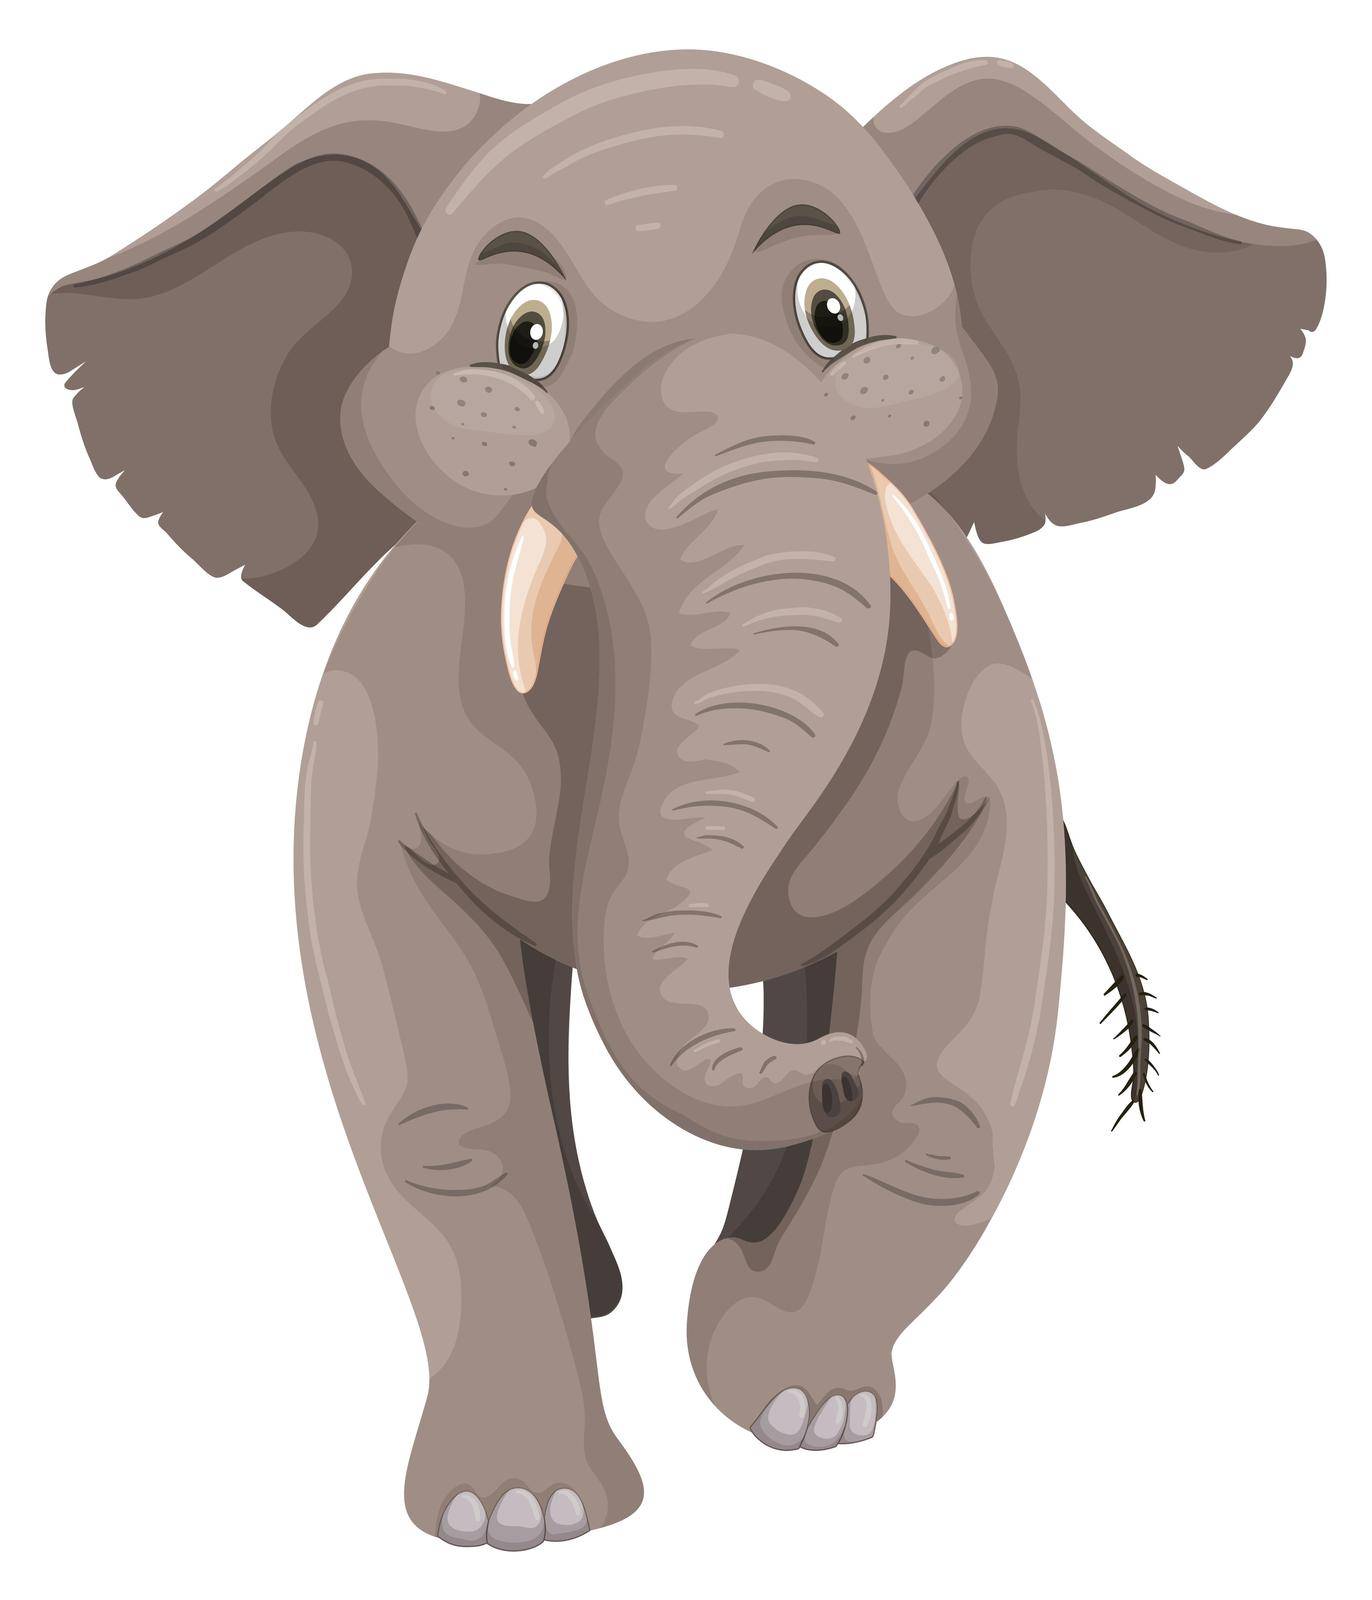 Baby elephant with gray skin illustration